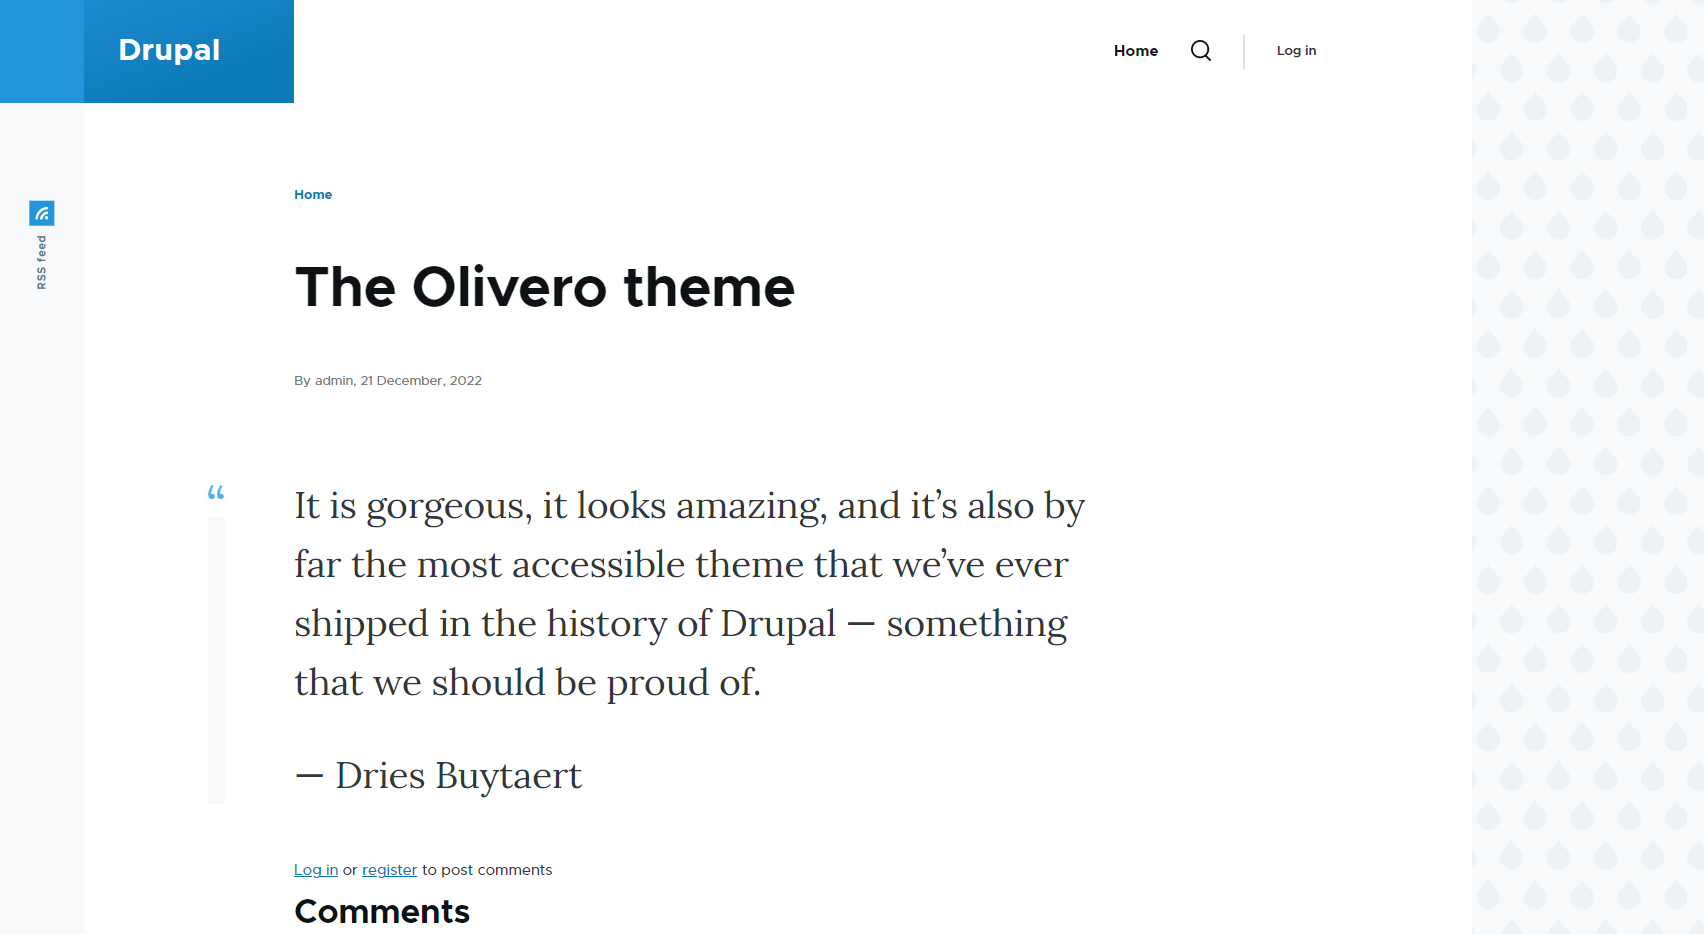 The Olivero theme